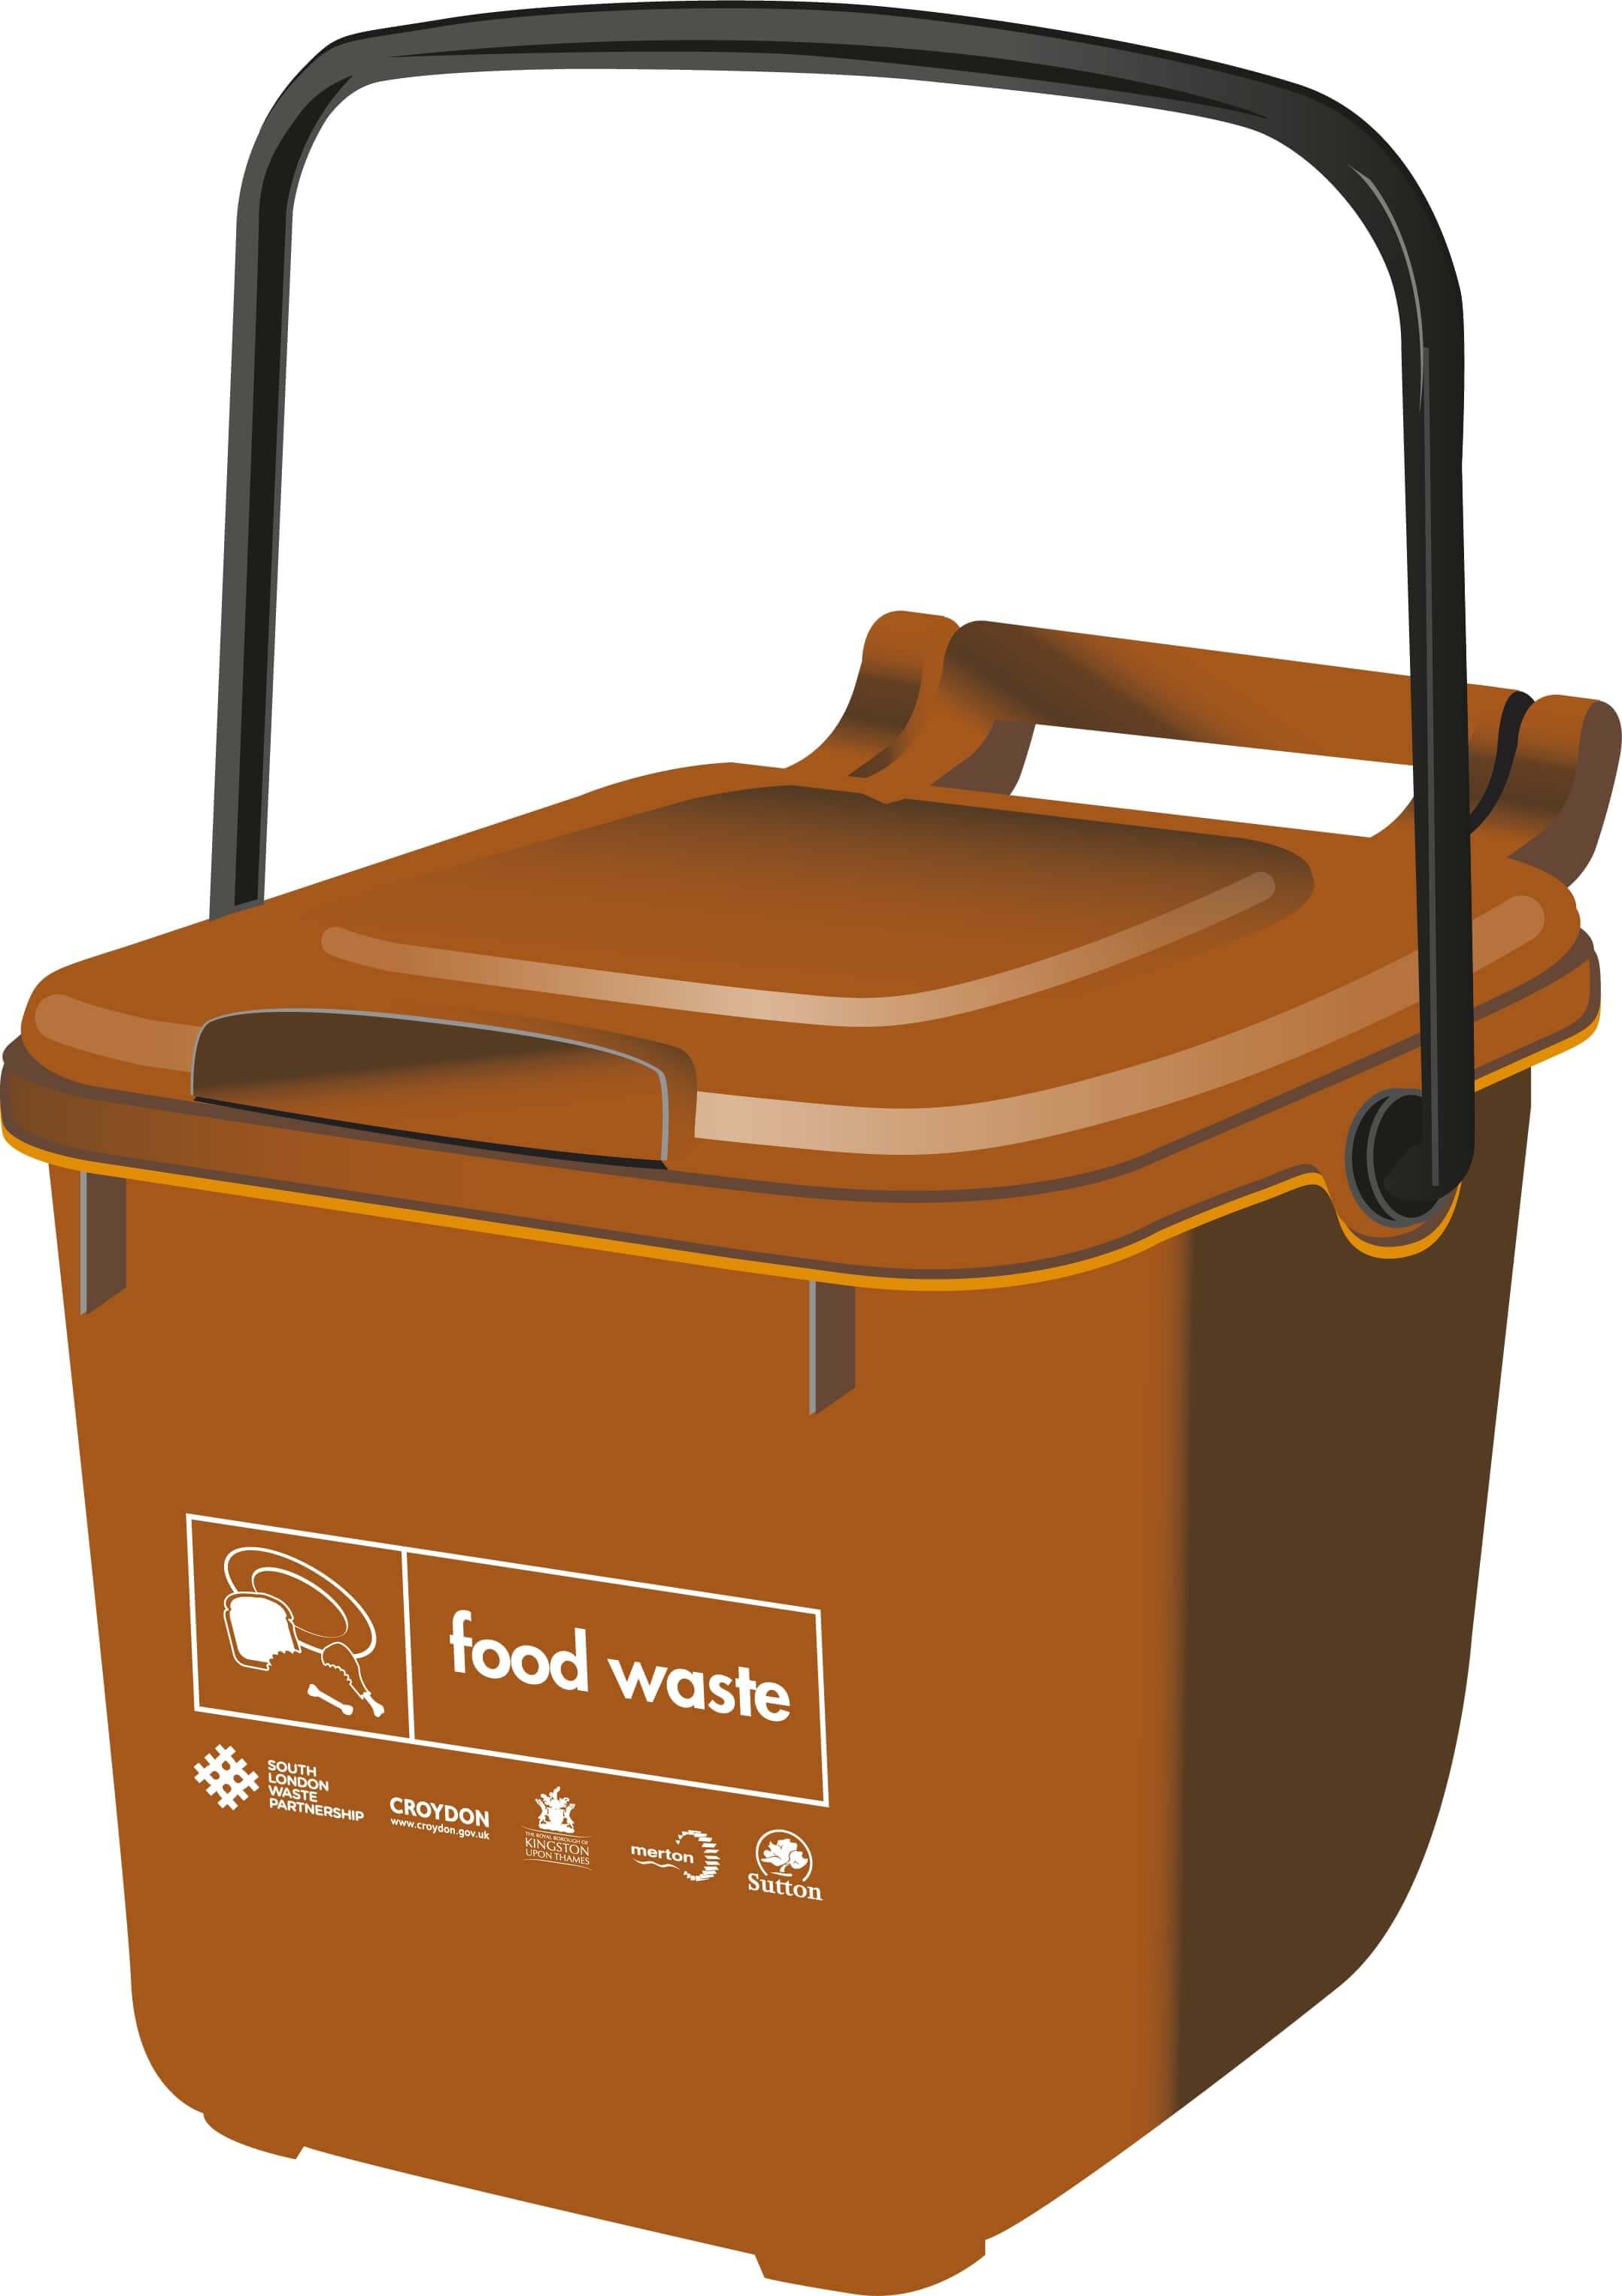 Brown indoor lockable food waste bin with South London Waste Partnership logos on it.